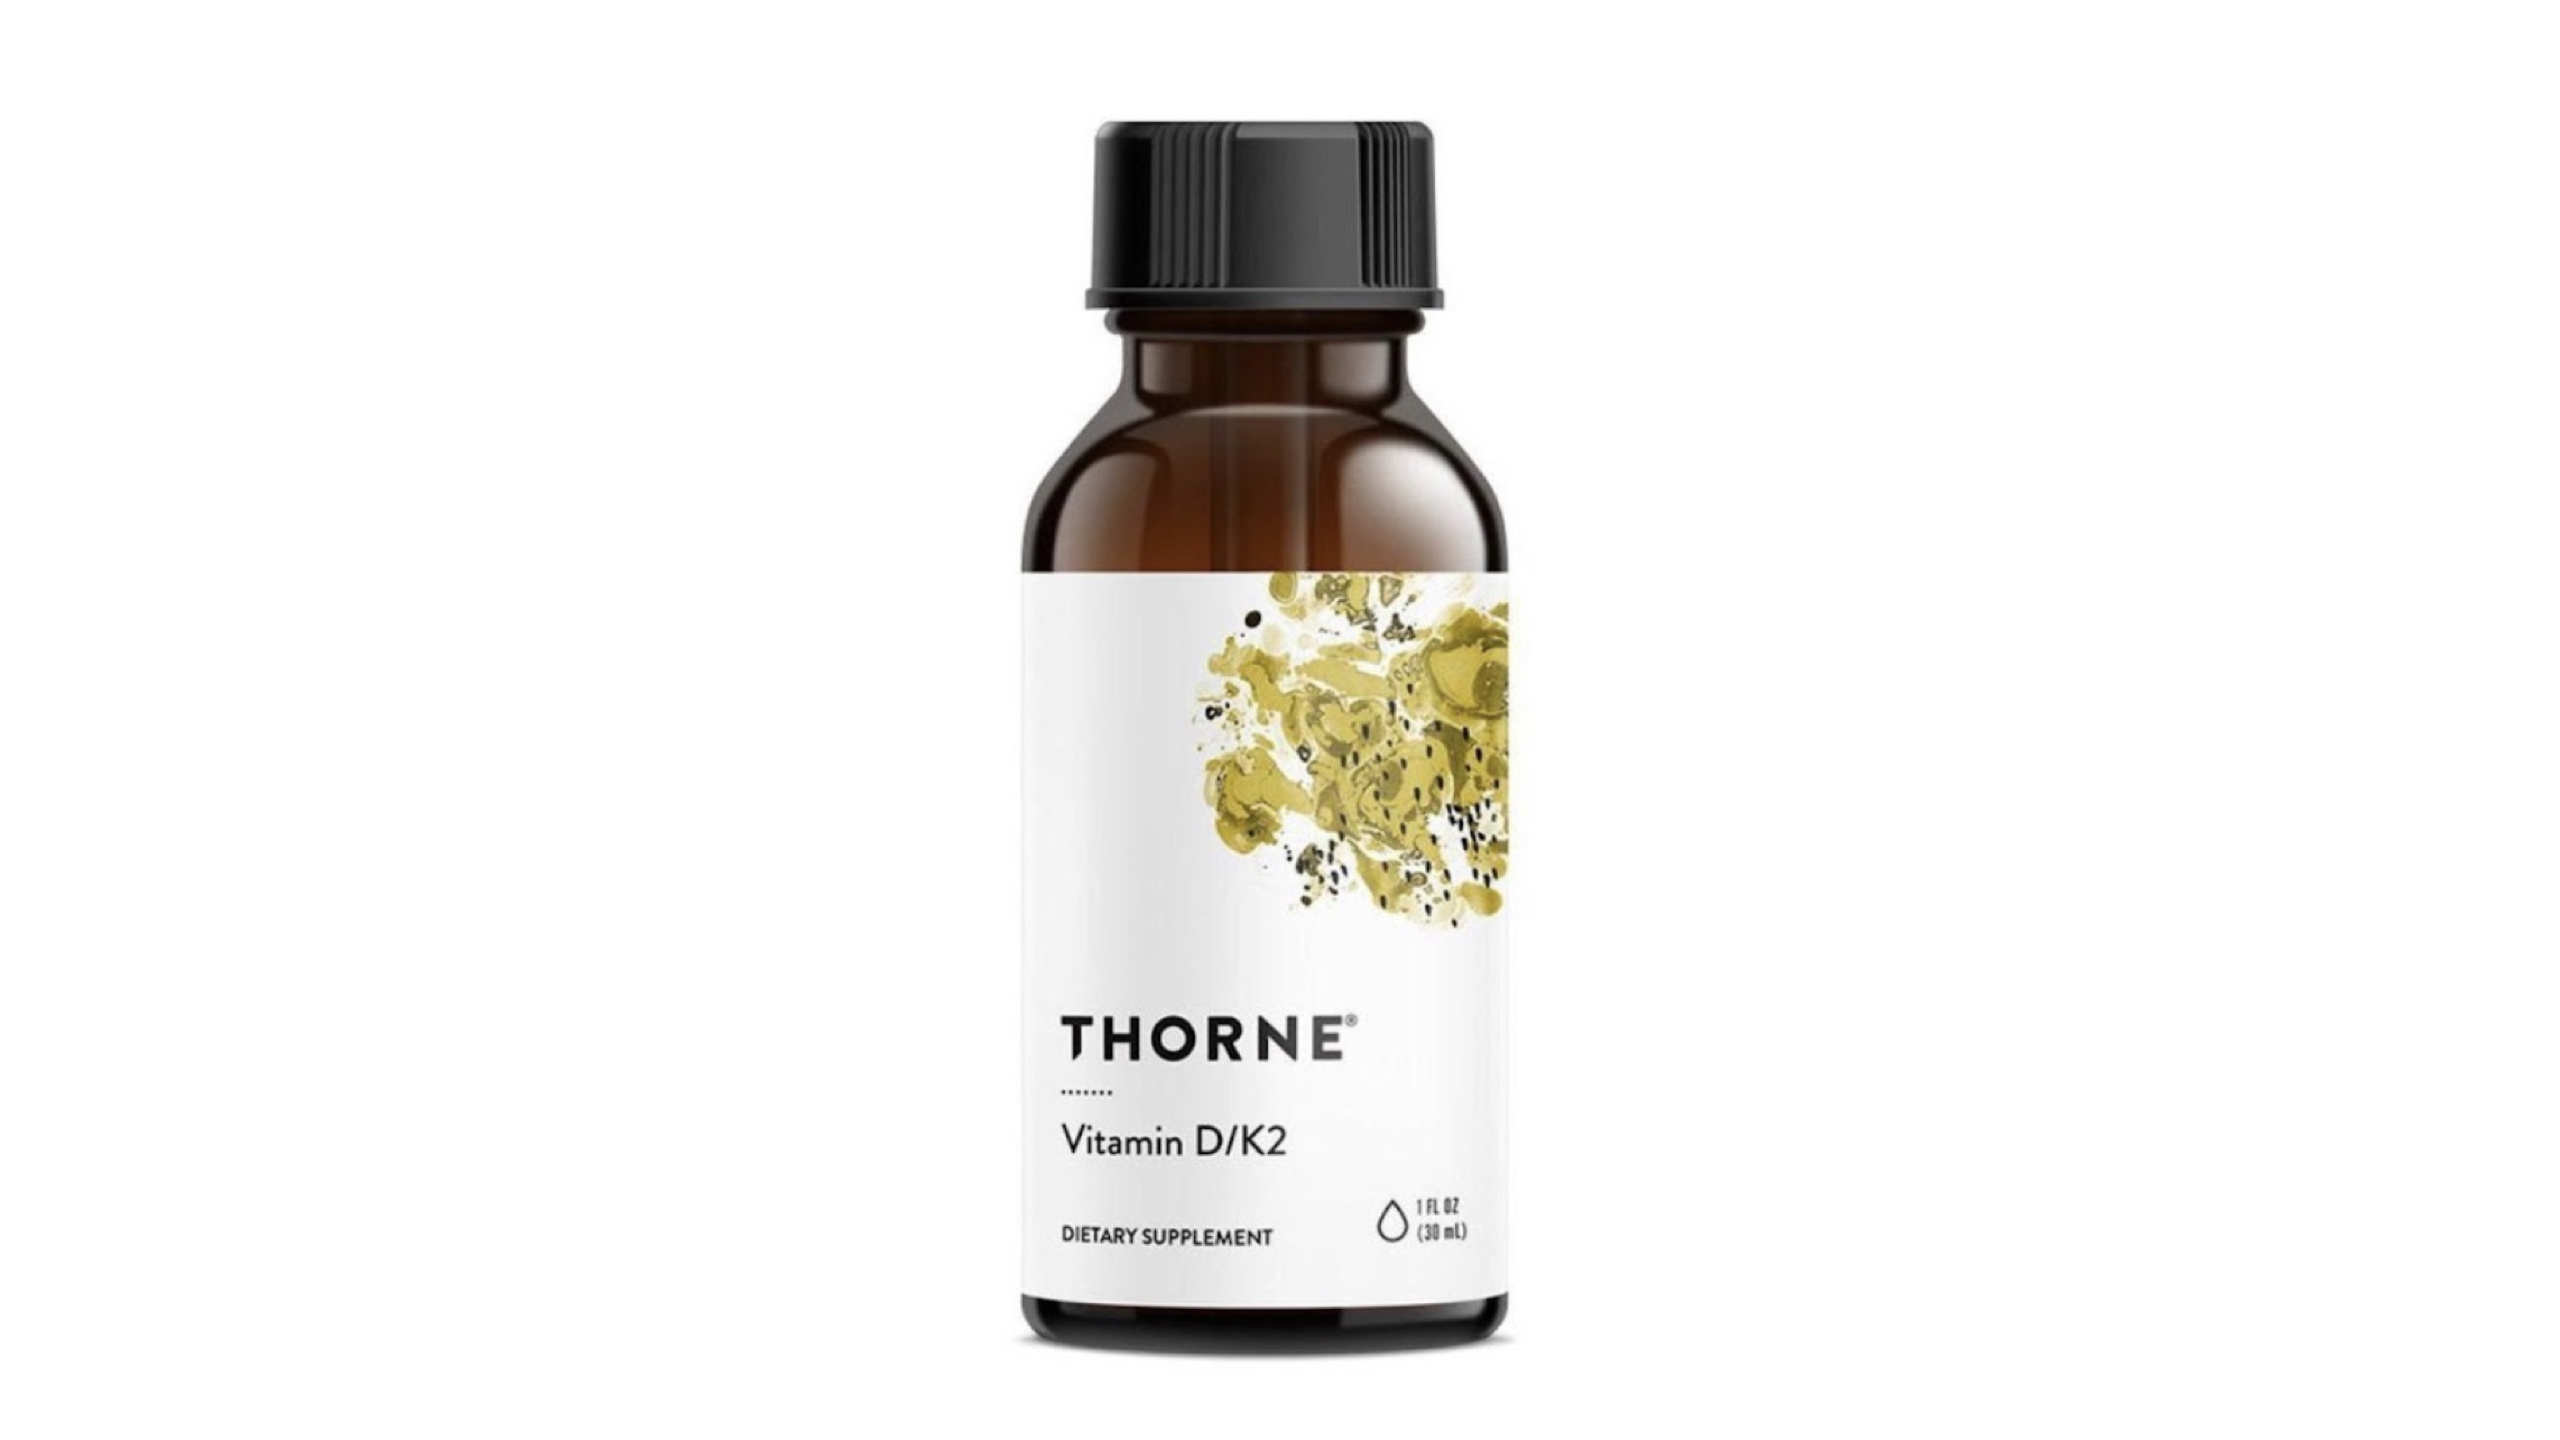 Thorne Vitamin D/K2 supplement 